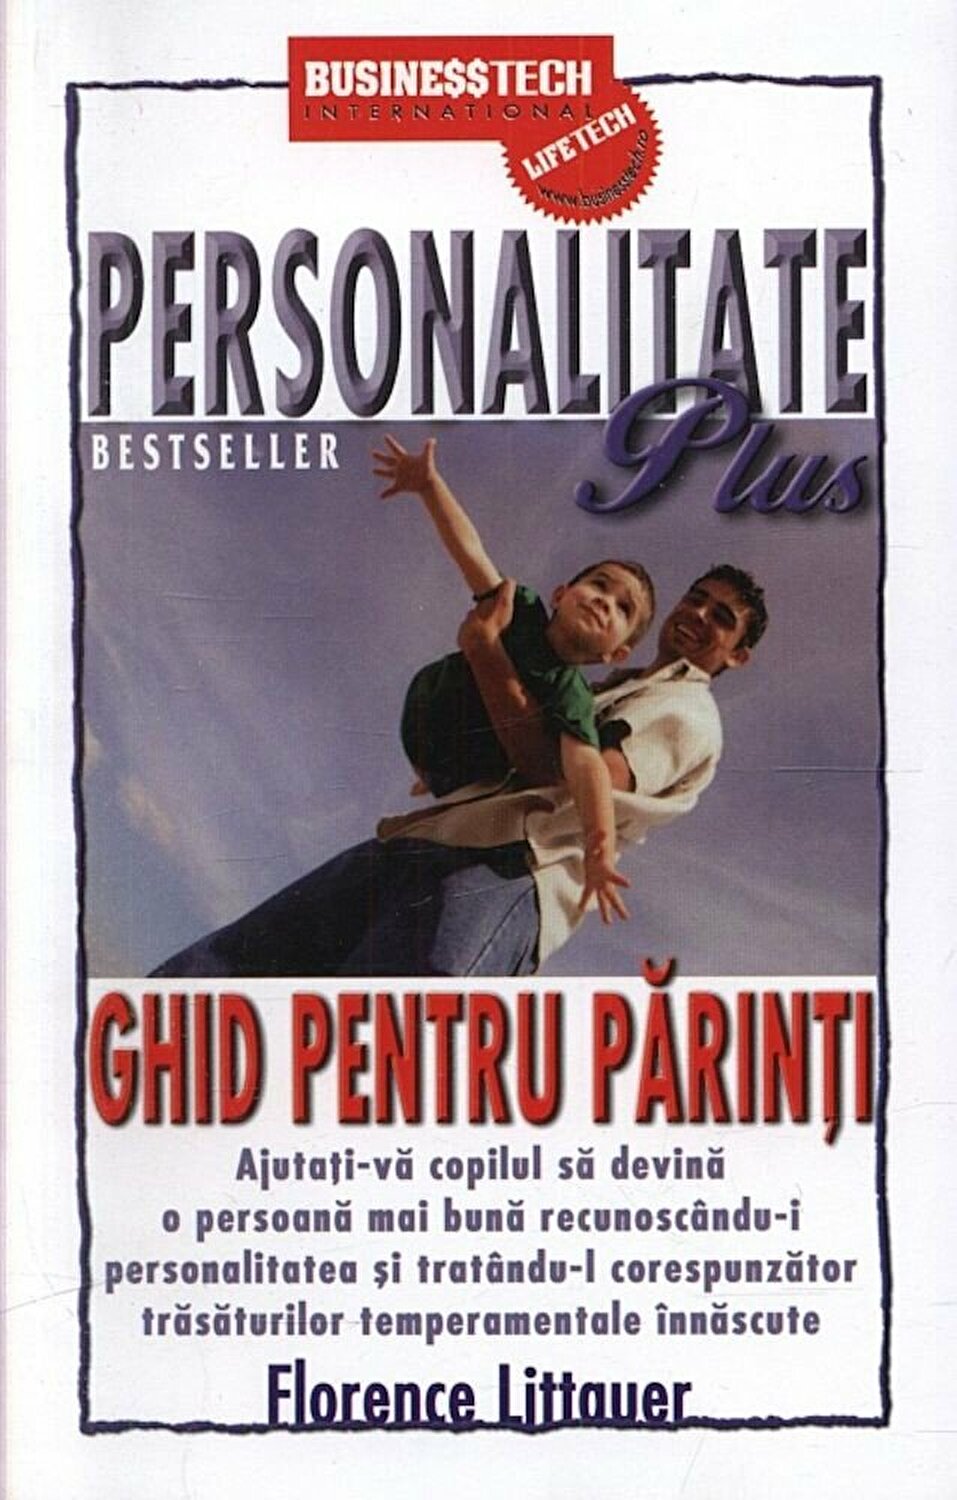 PDF Personalitate Plus – Ghid pentru parinti | Florence Littauer BusinessTech Carte